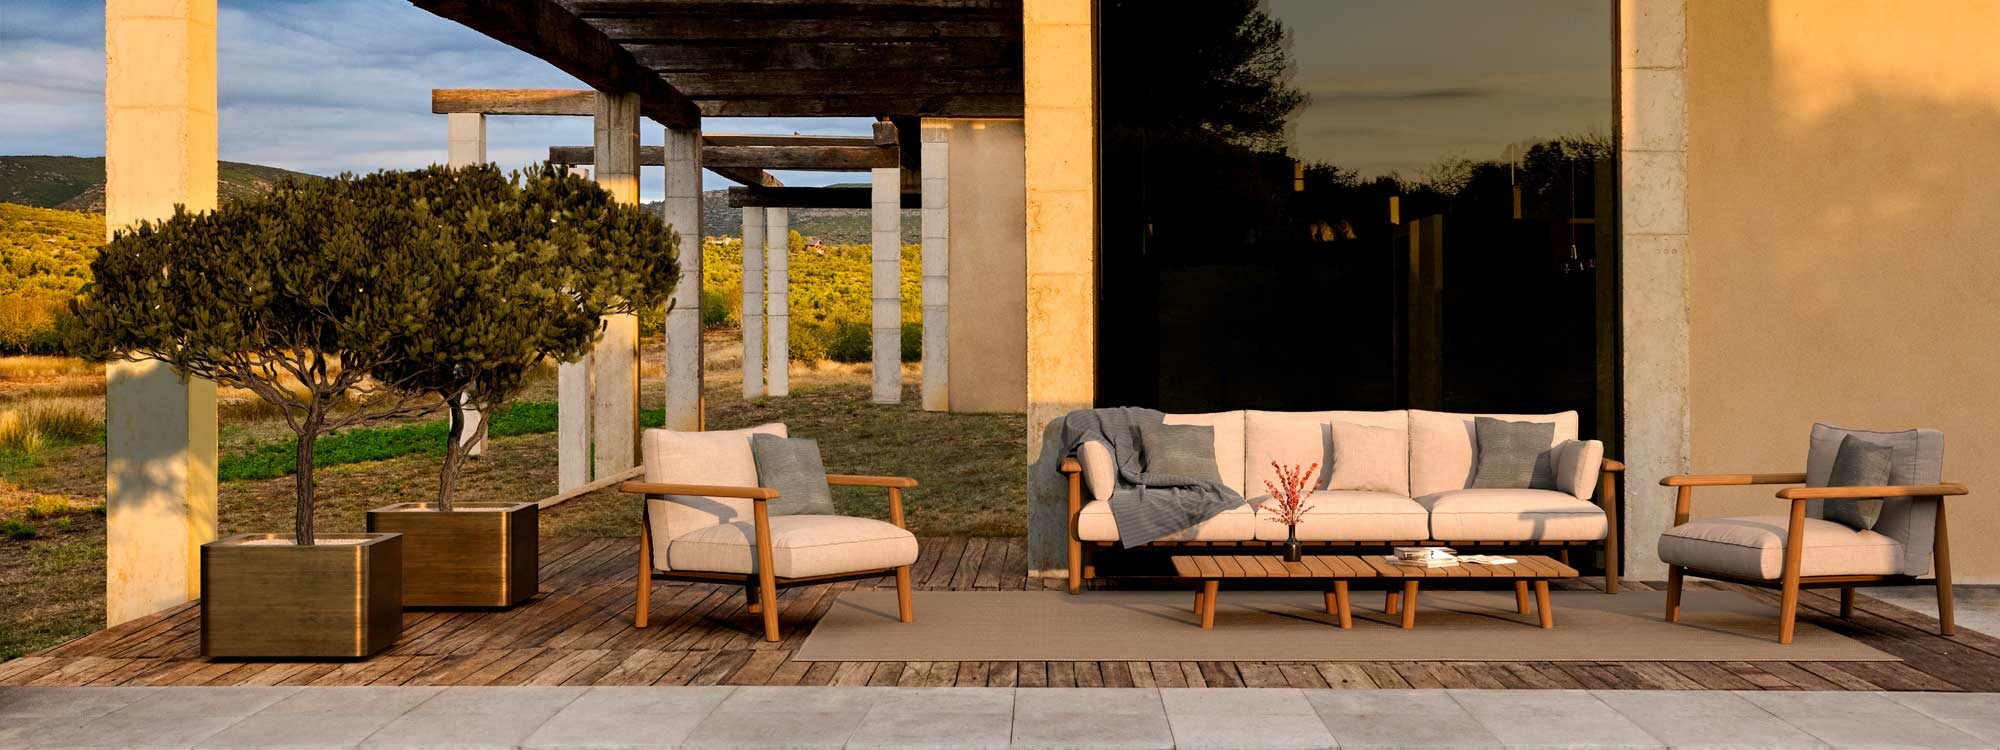 Image of Royal Botania Mambo Lounge teak sofa and Cuprum square brass planters on sunny terrace